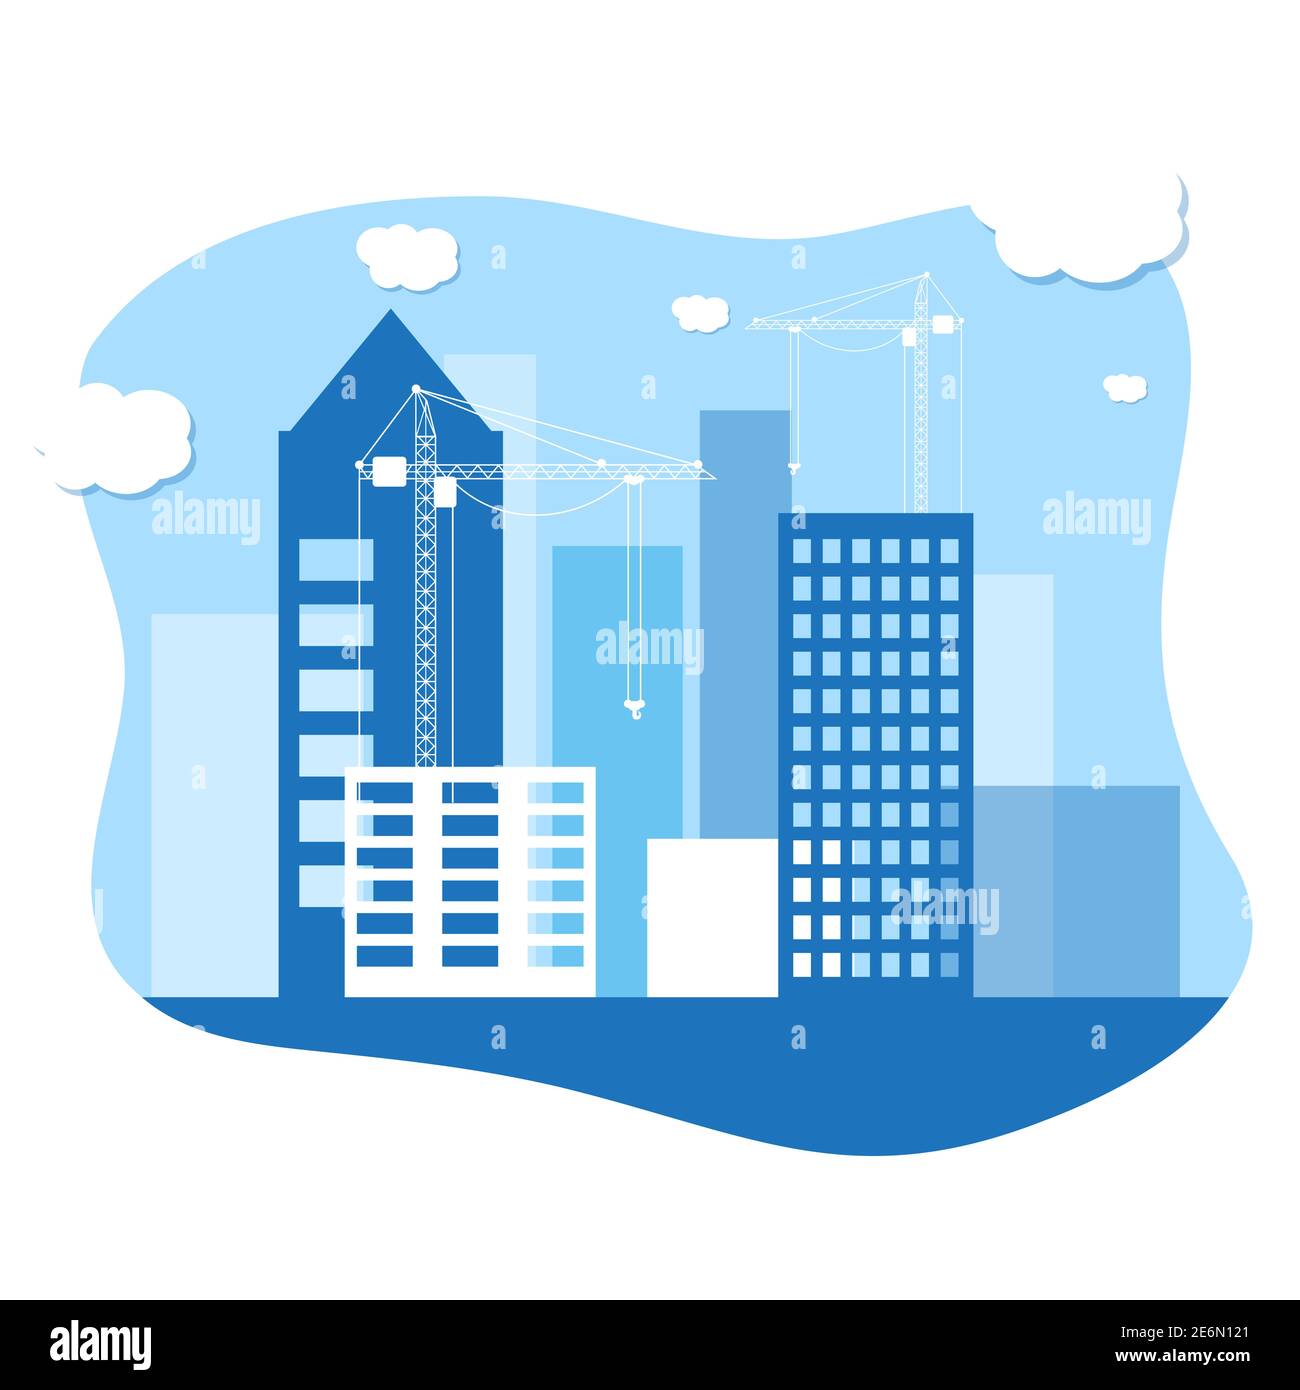 Baustelle mit Gebäuden und Kränen Vektor-Illustration Hintergrund Stock Vektor